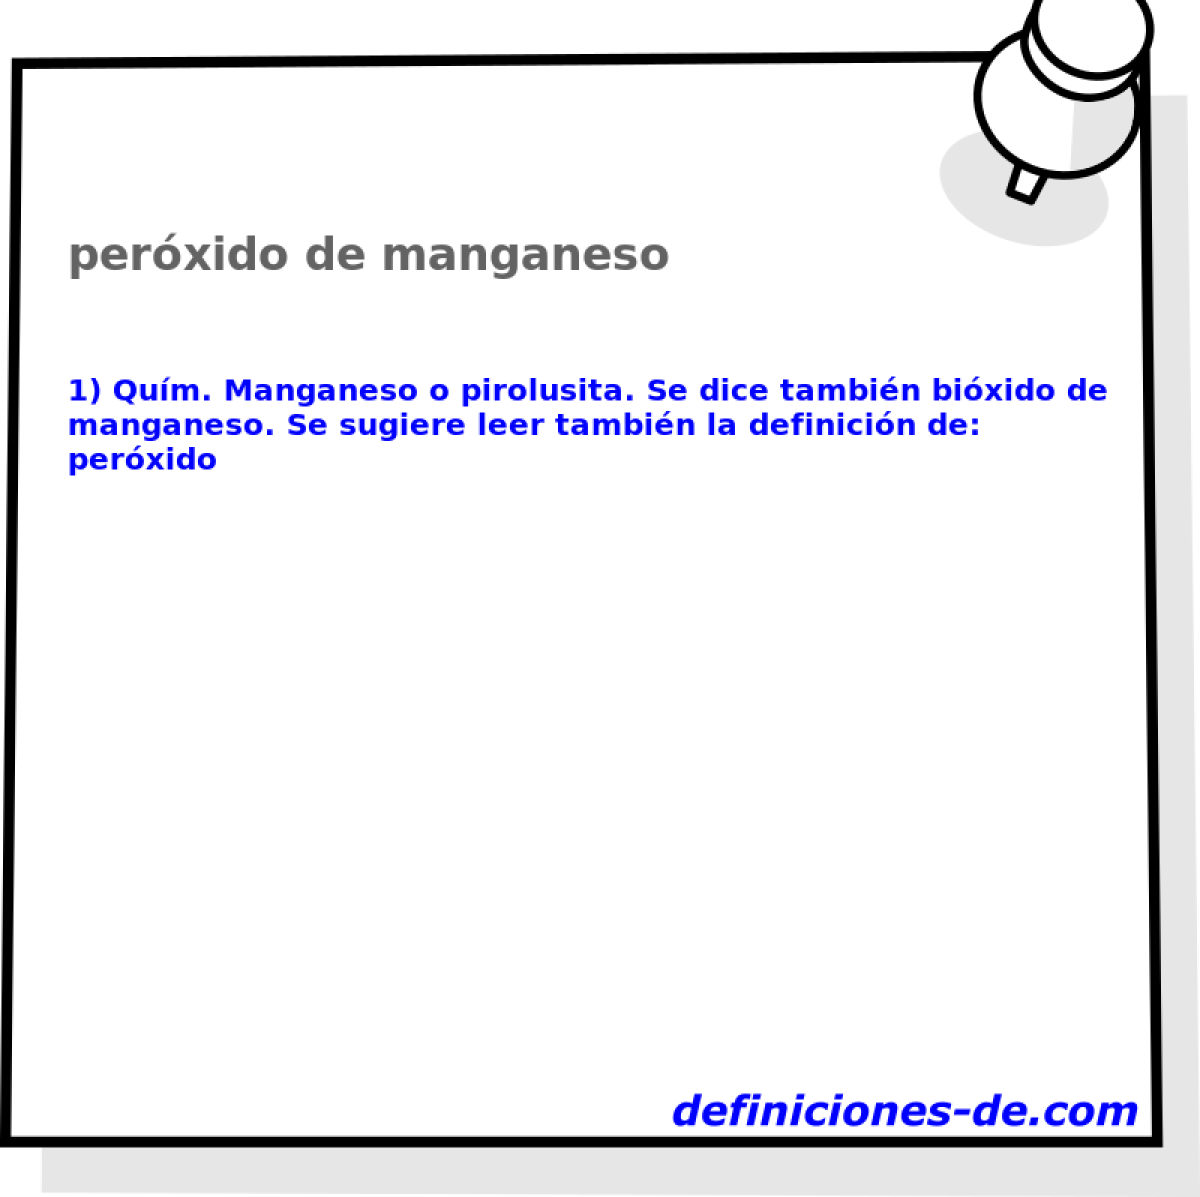 perxido de manganeso 